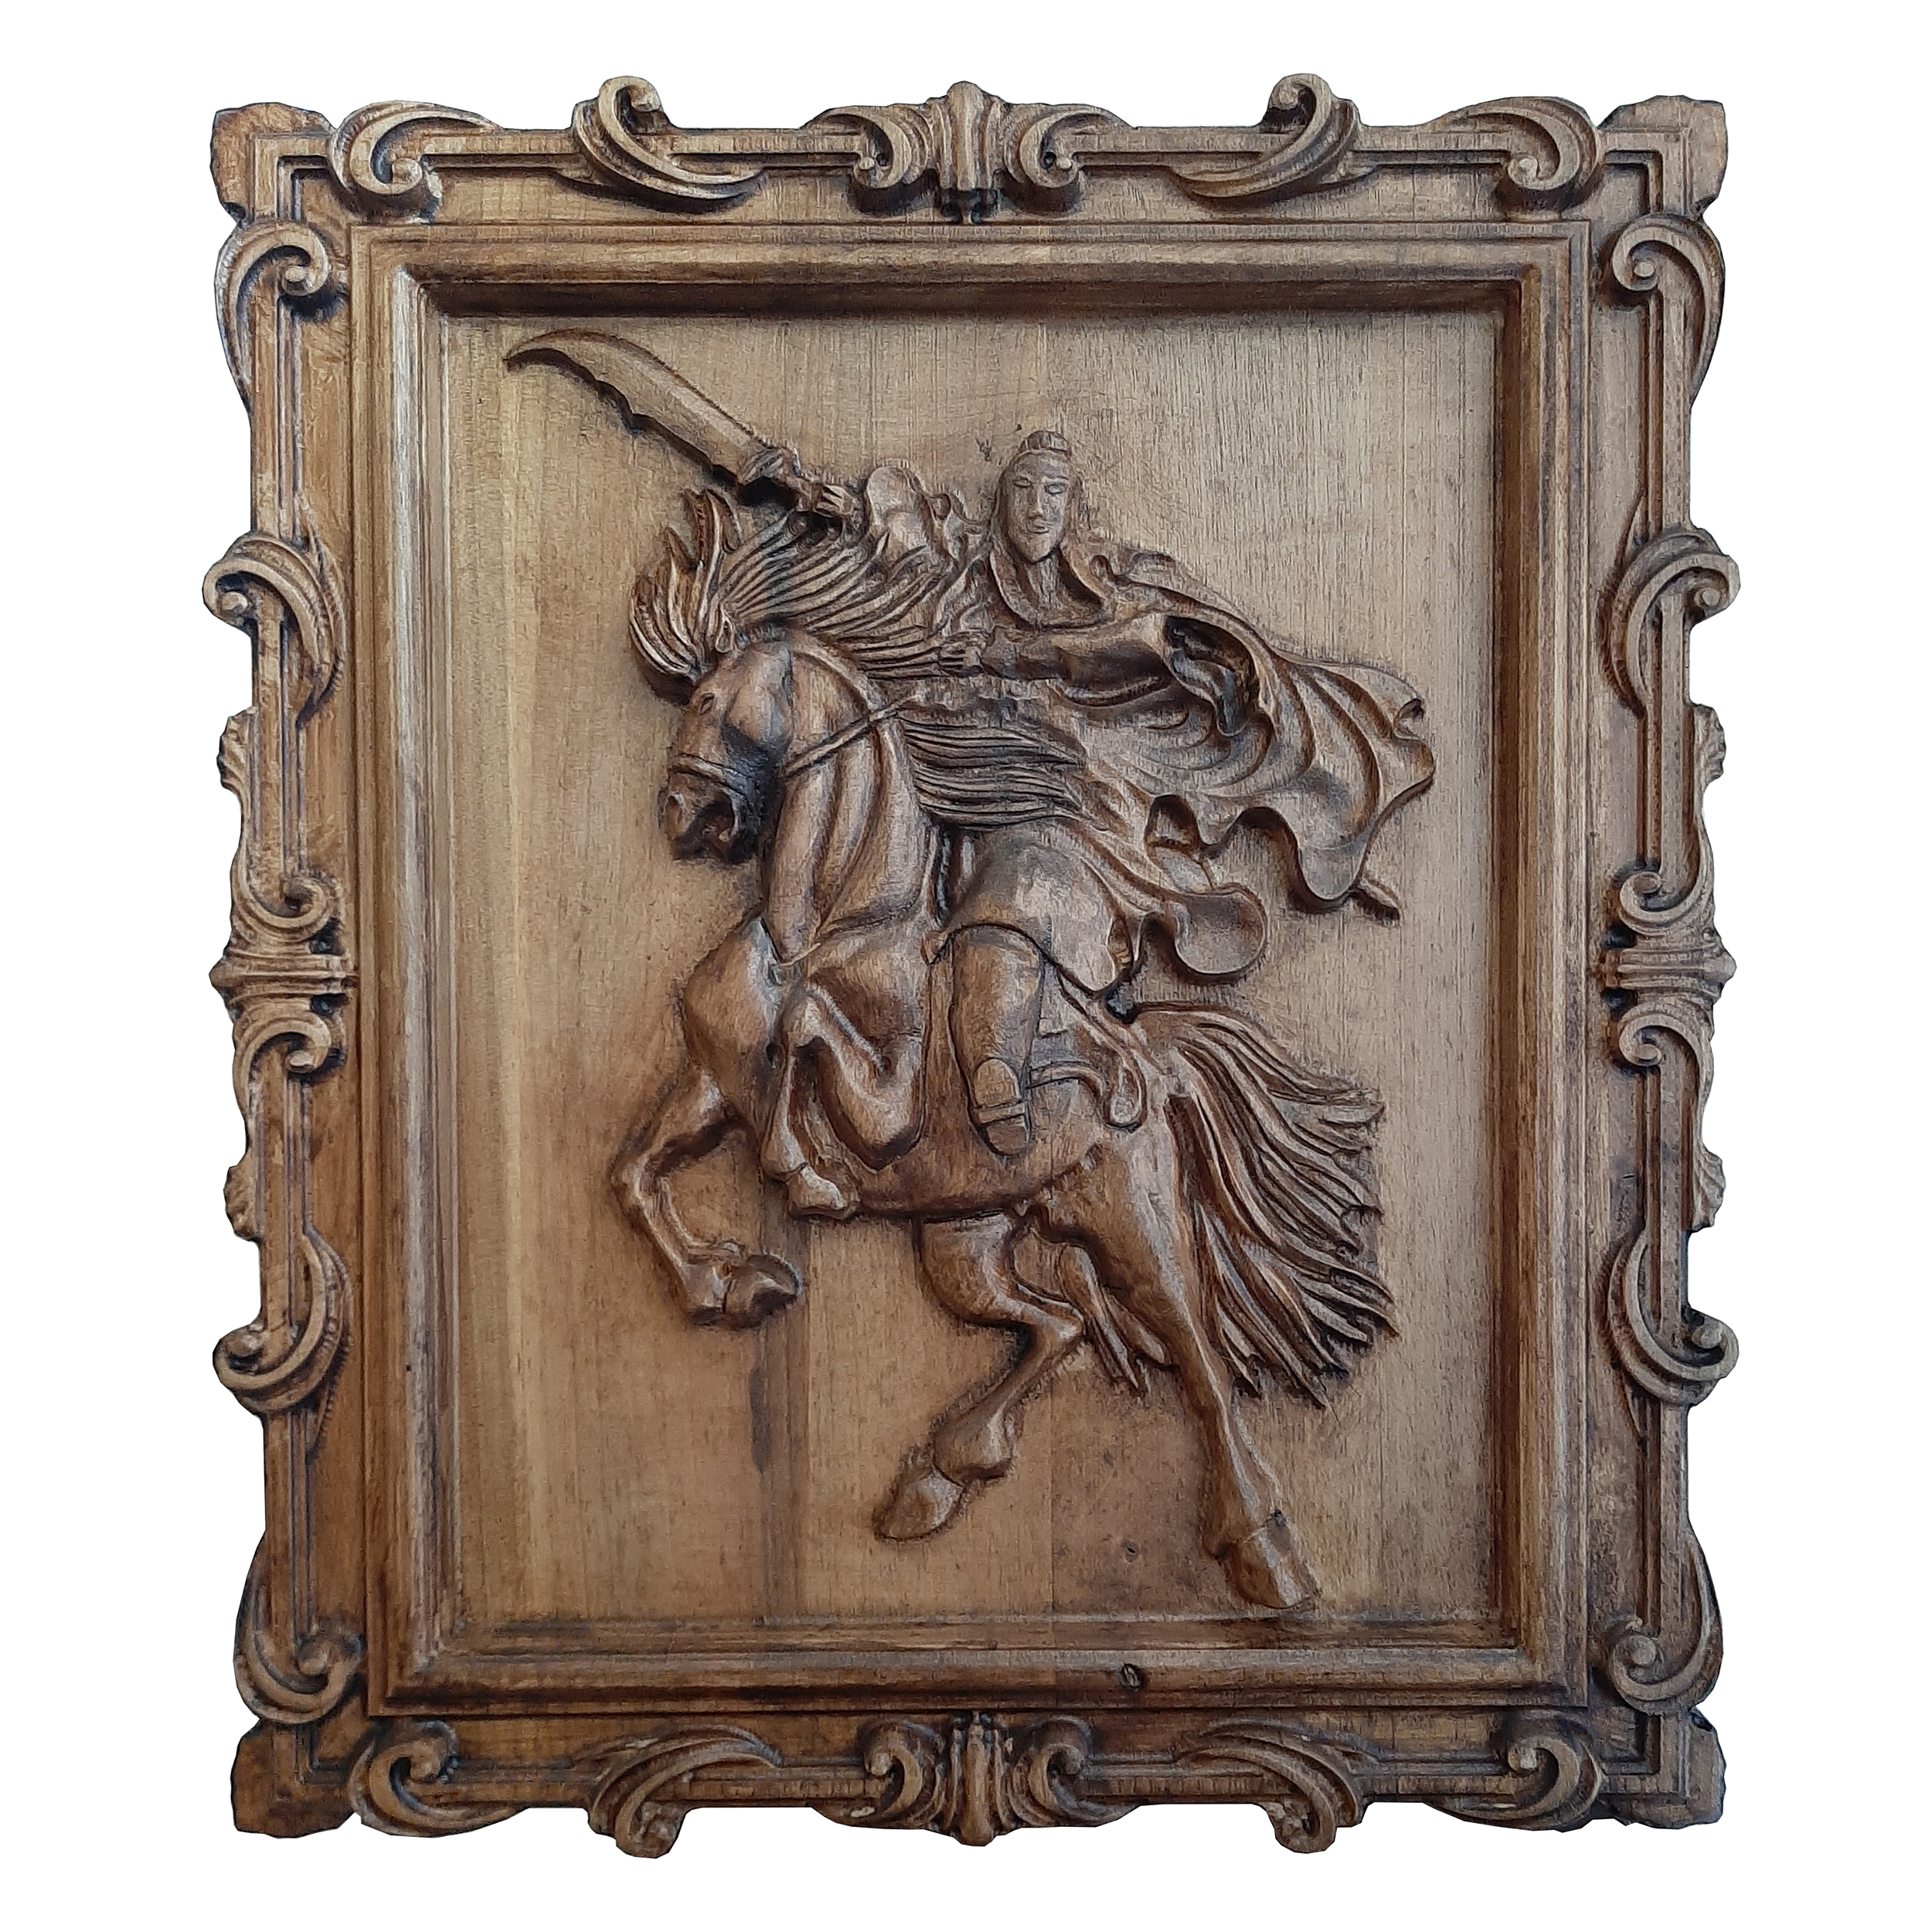 Handmade decorative wooden carving tableau rider design, wct004 model